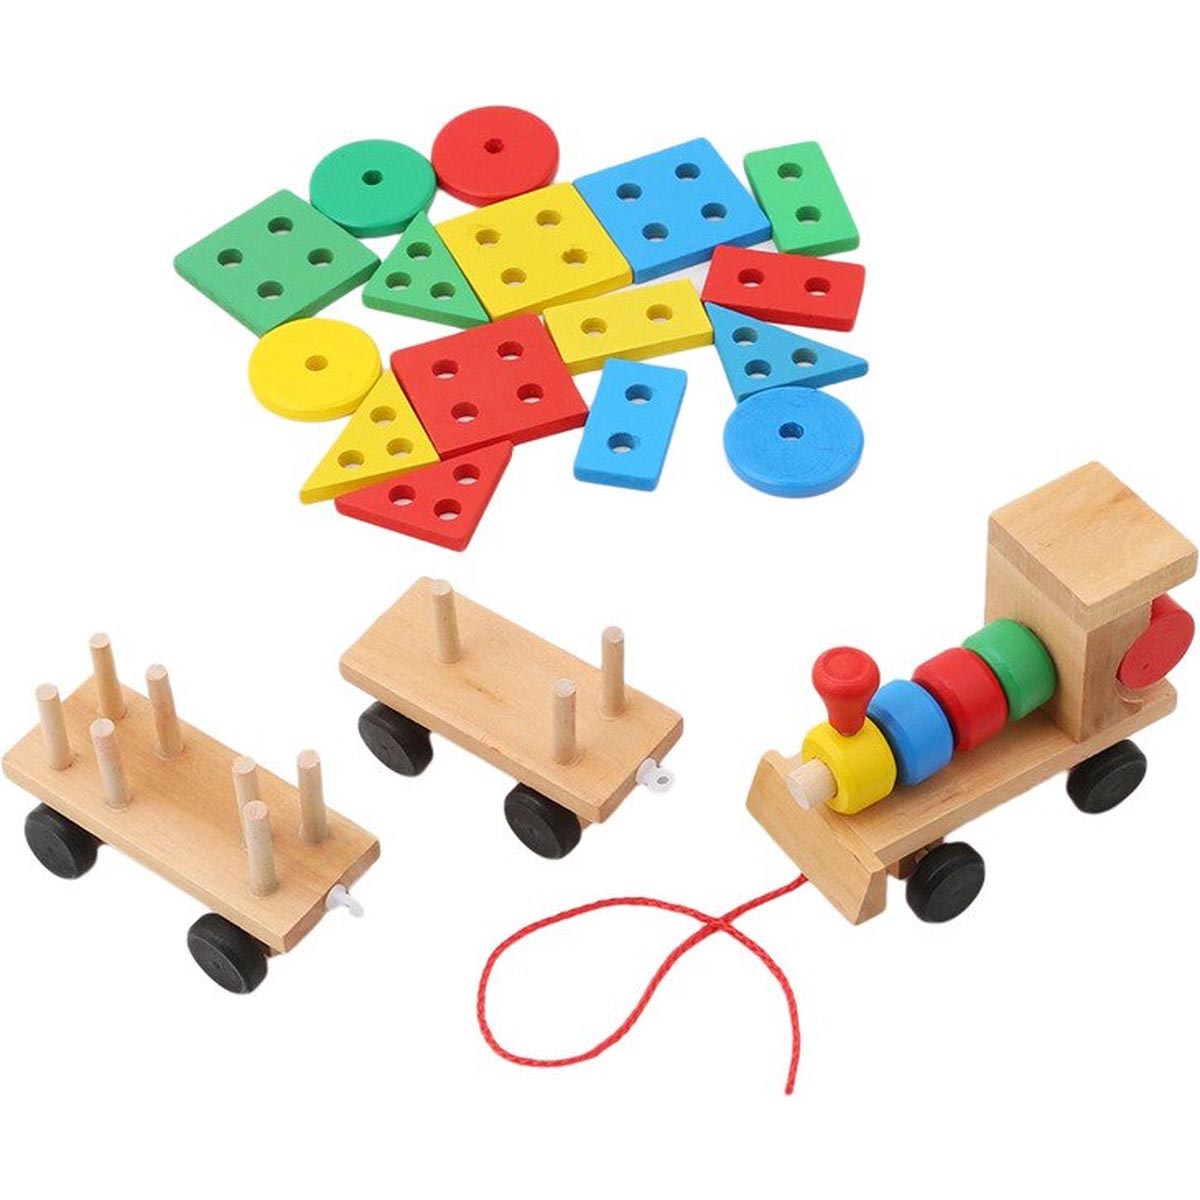 <tc>Ariko</tc> XL Wooden Train with blocks and shapes - Block train - Toy train - Education with shapes and colors -